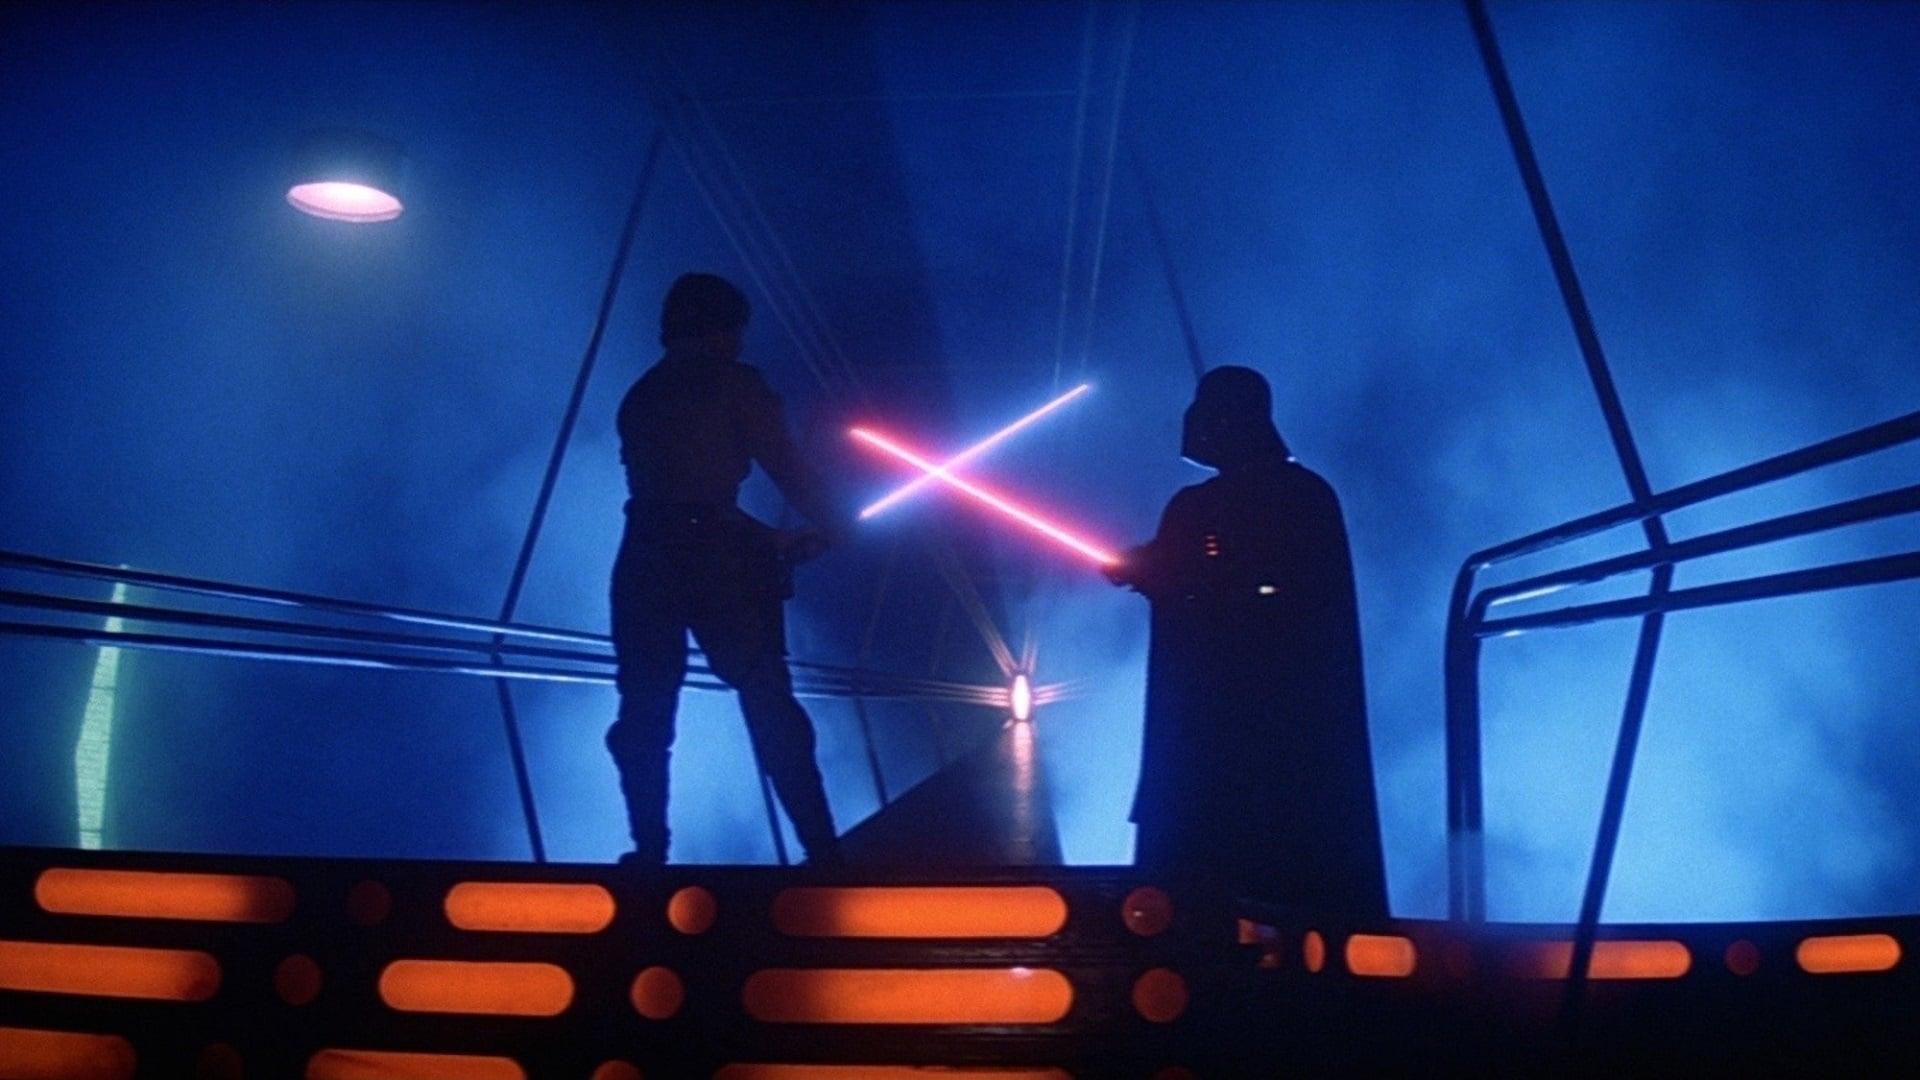 The Empire Strikes Back backdrop